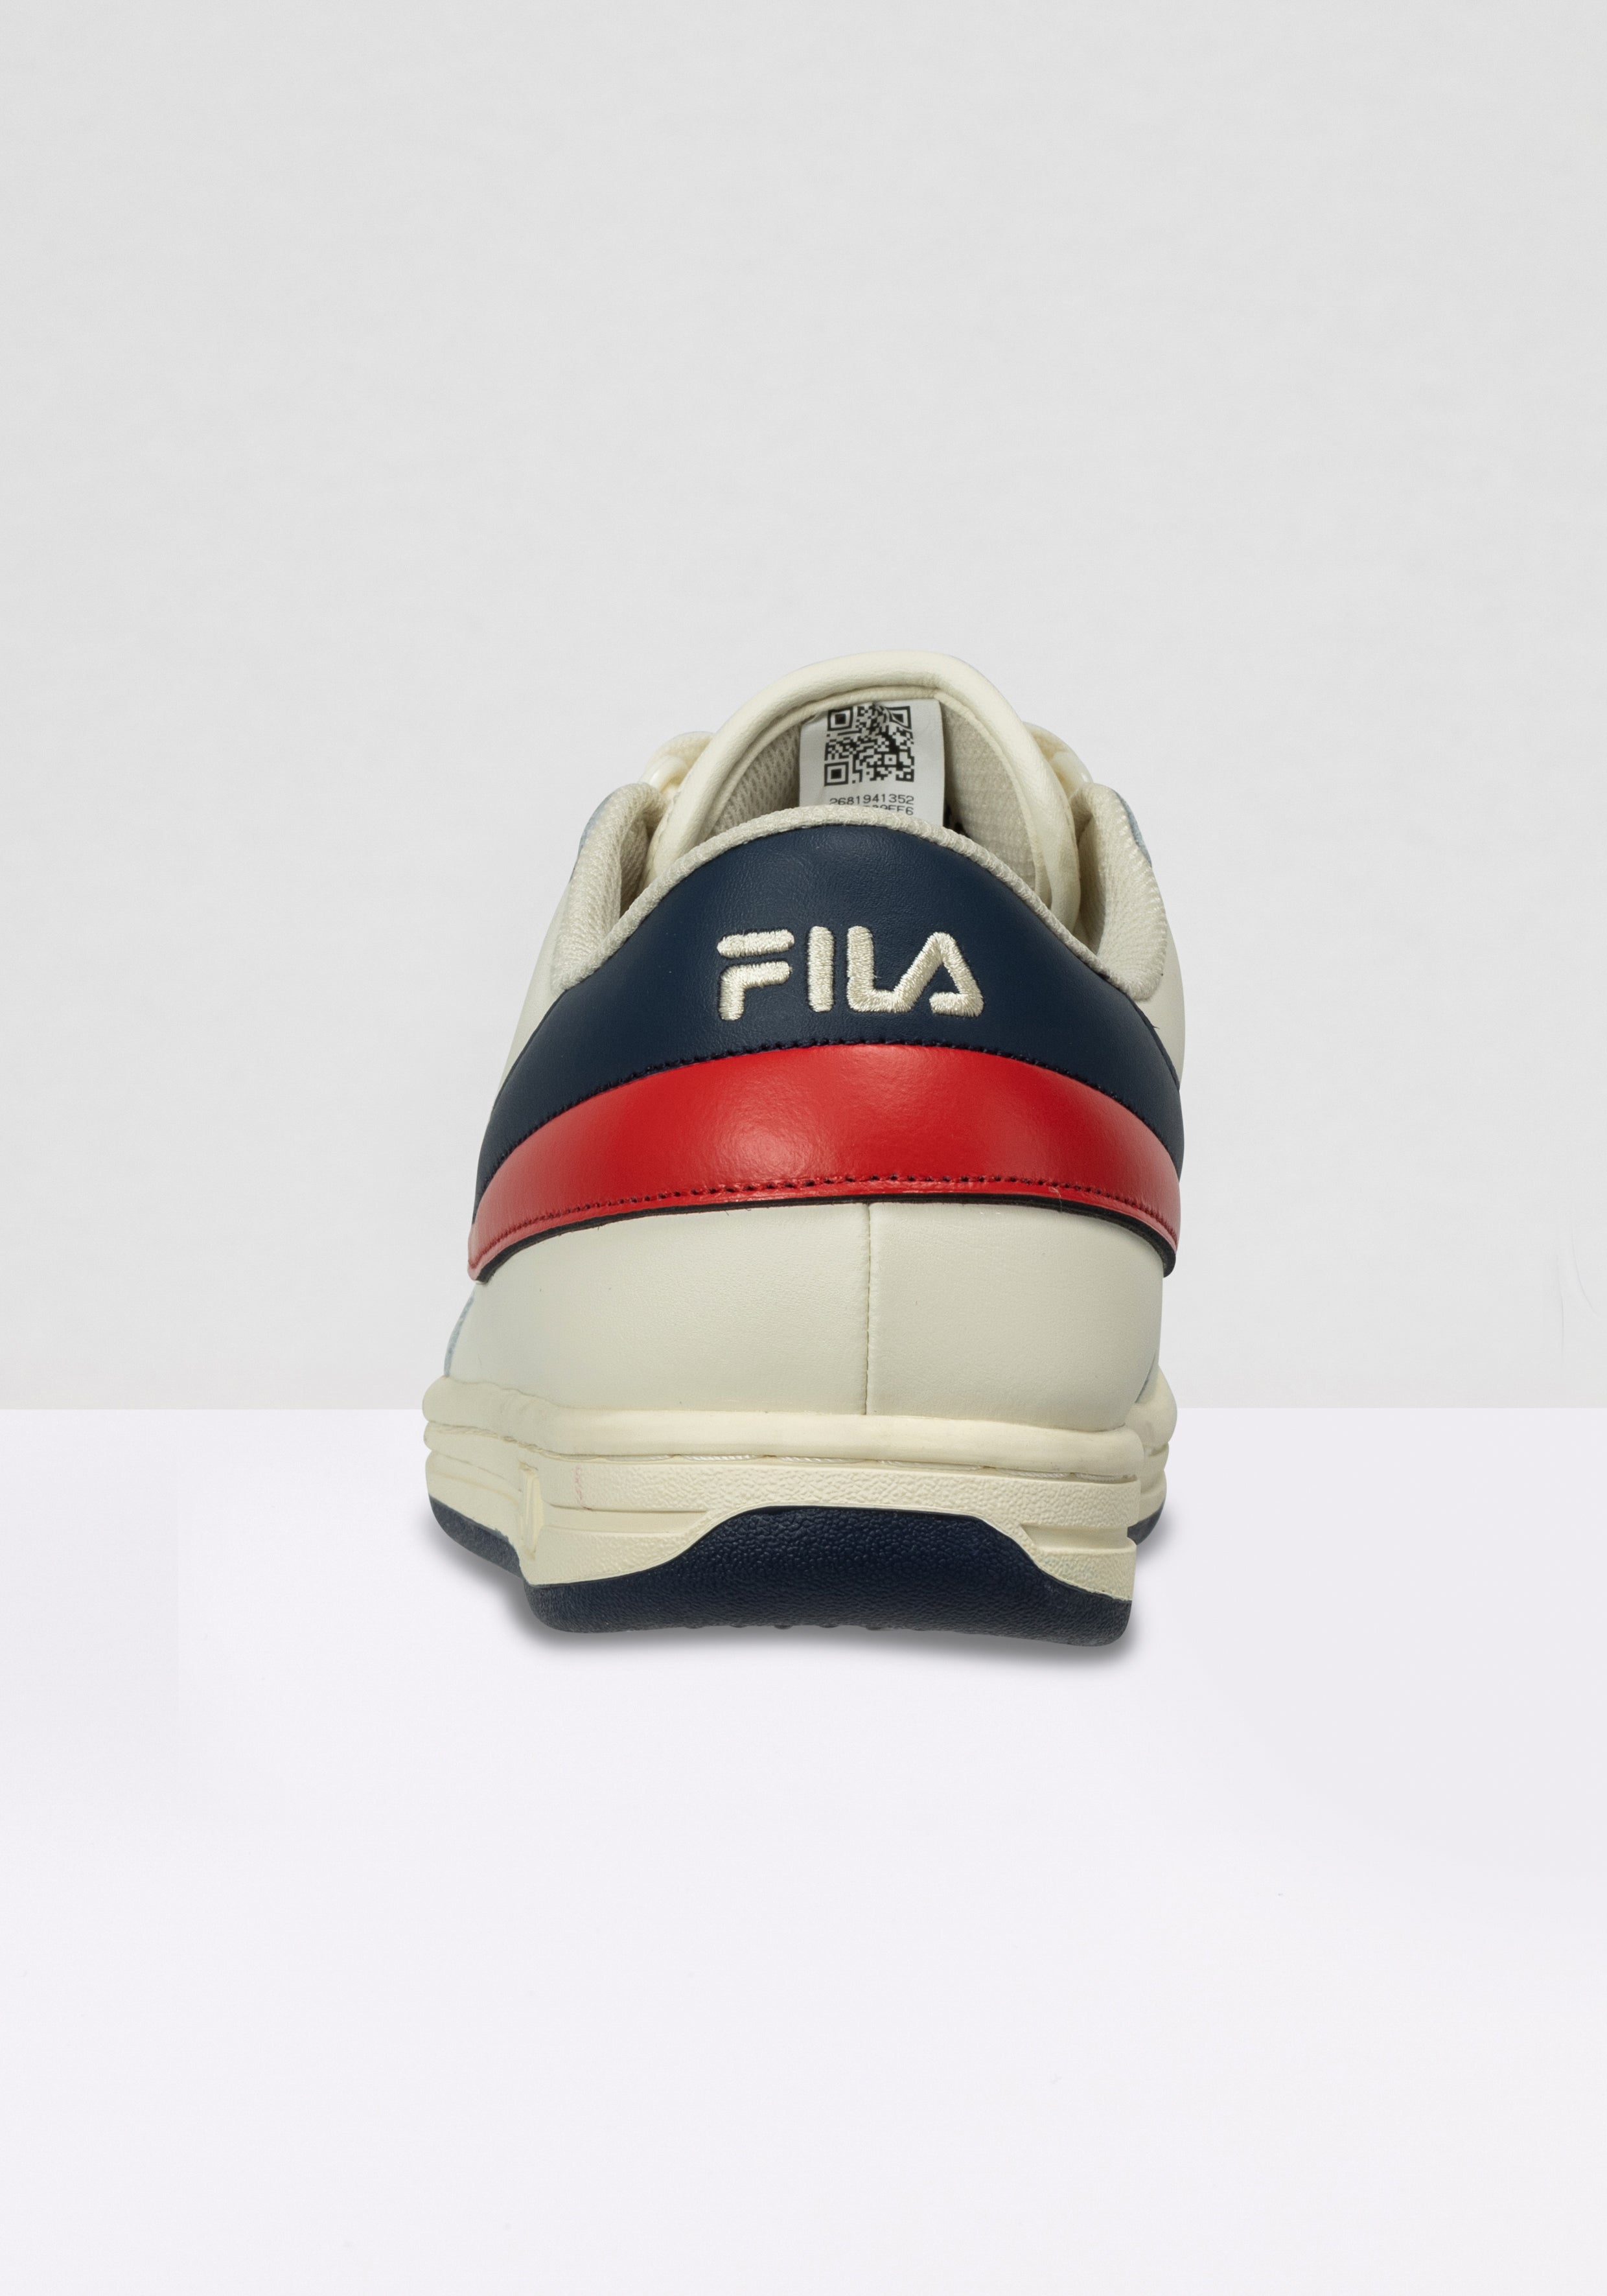 Original Tennis '83 Wmn in Antique White Sneakers Fila   